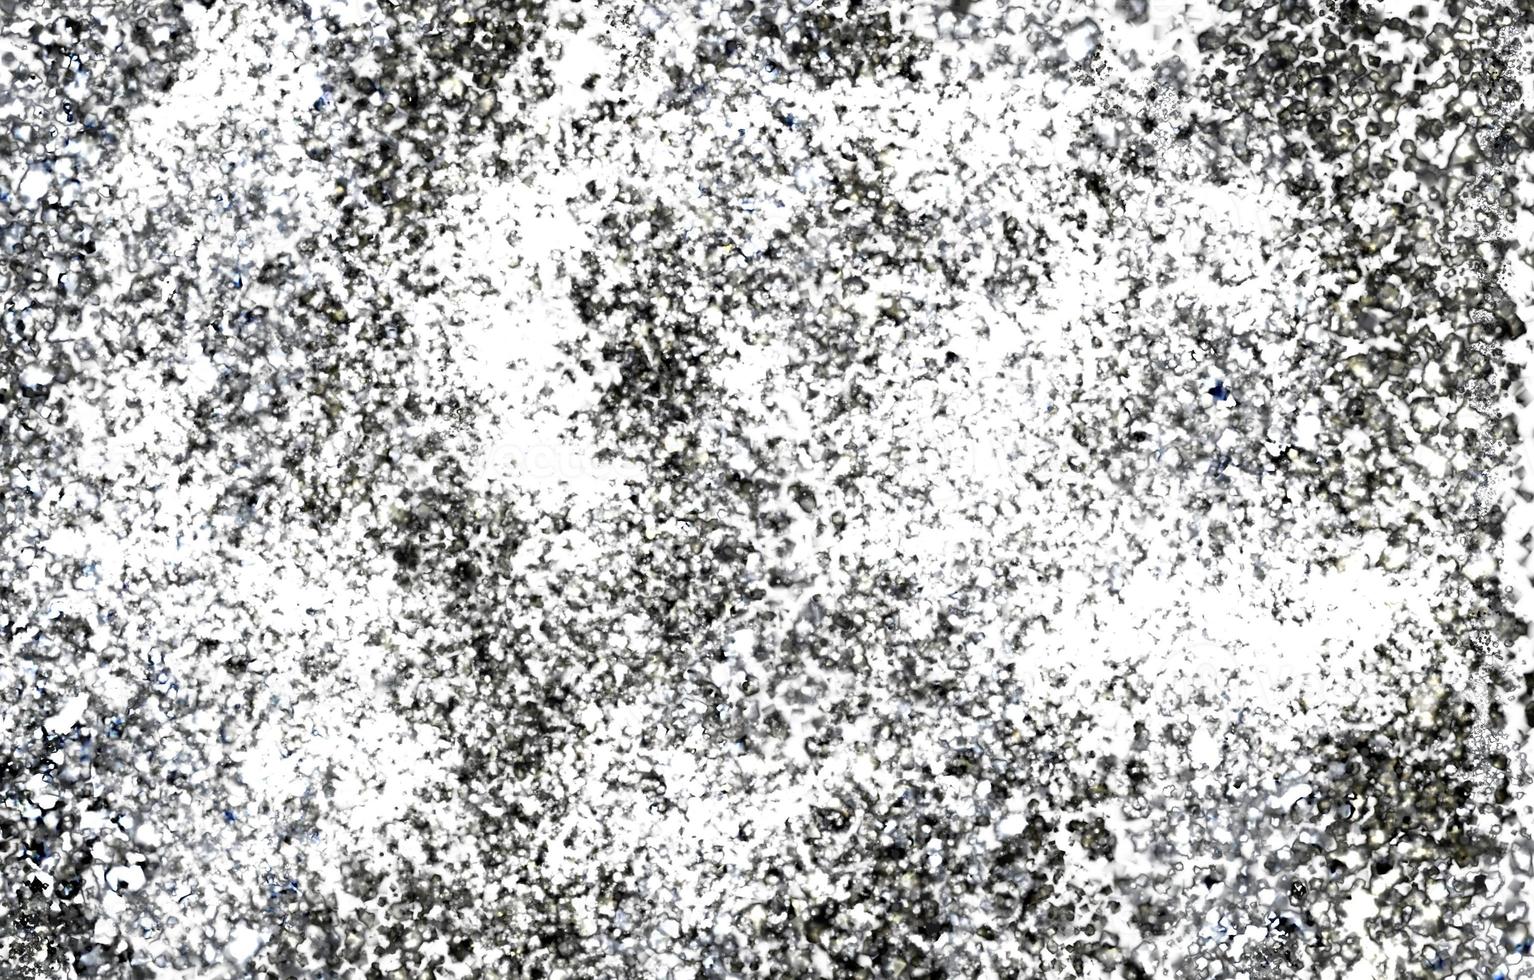 Scratch Grunge Urban Background.Grunge Black and White Distress Texture.Grunge rough dirty background. photo